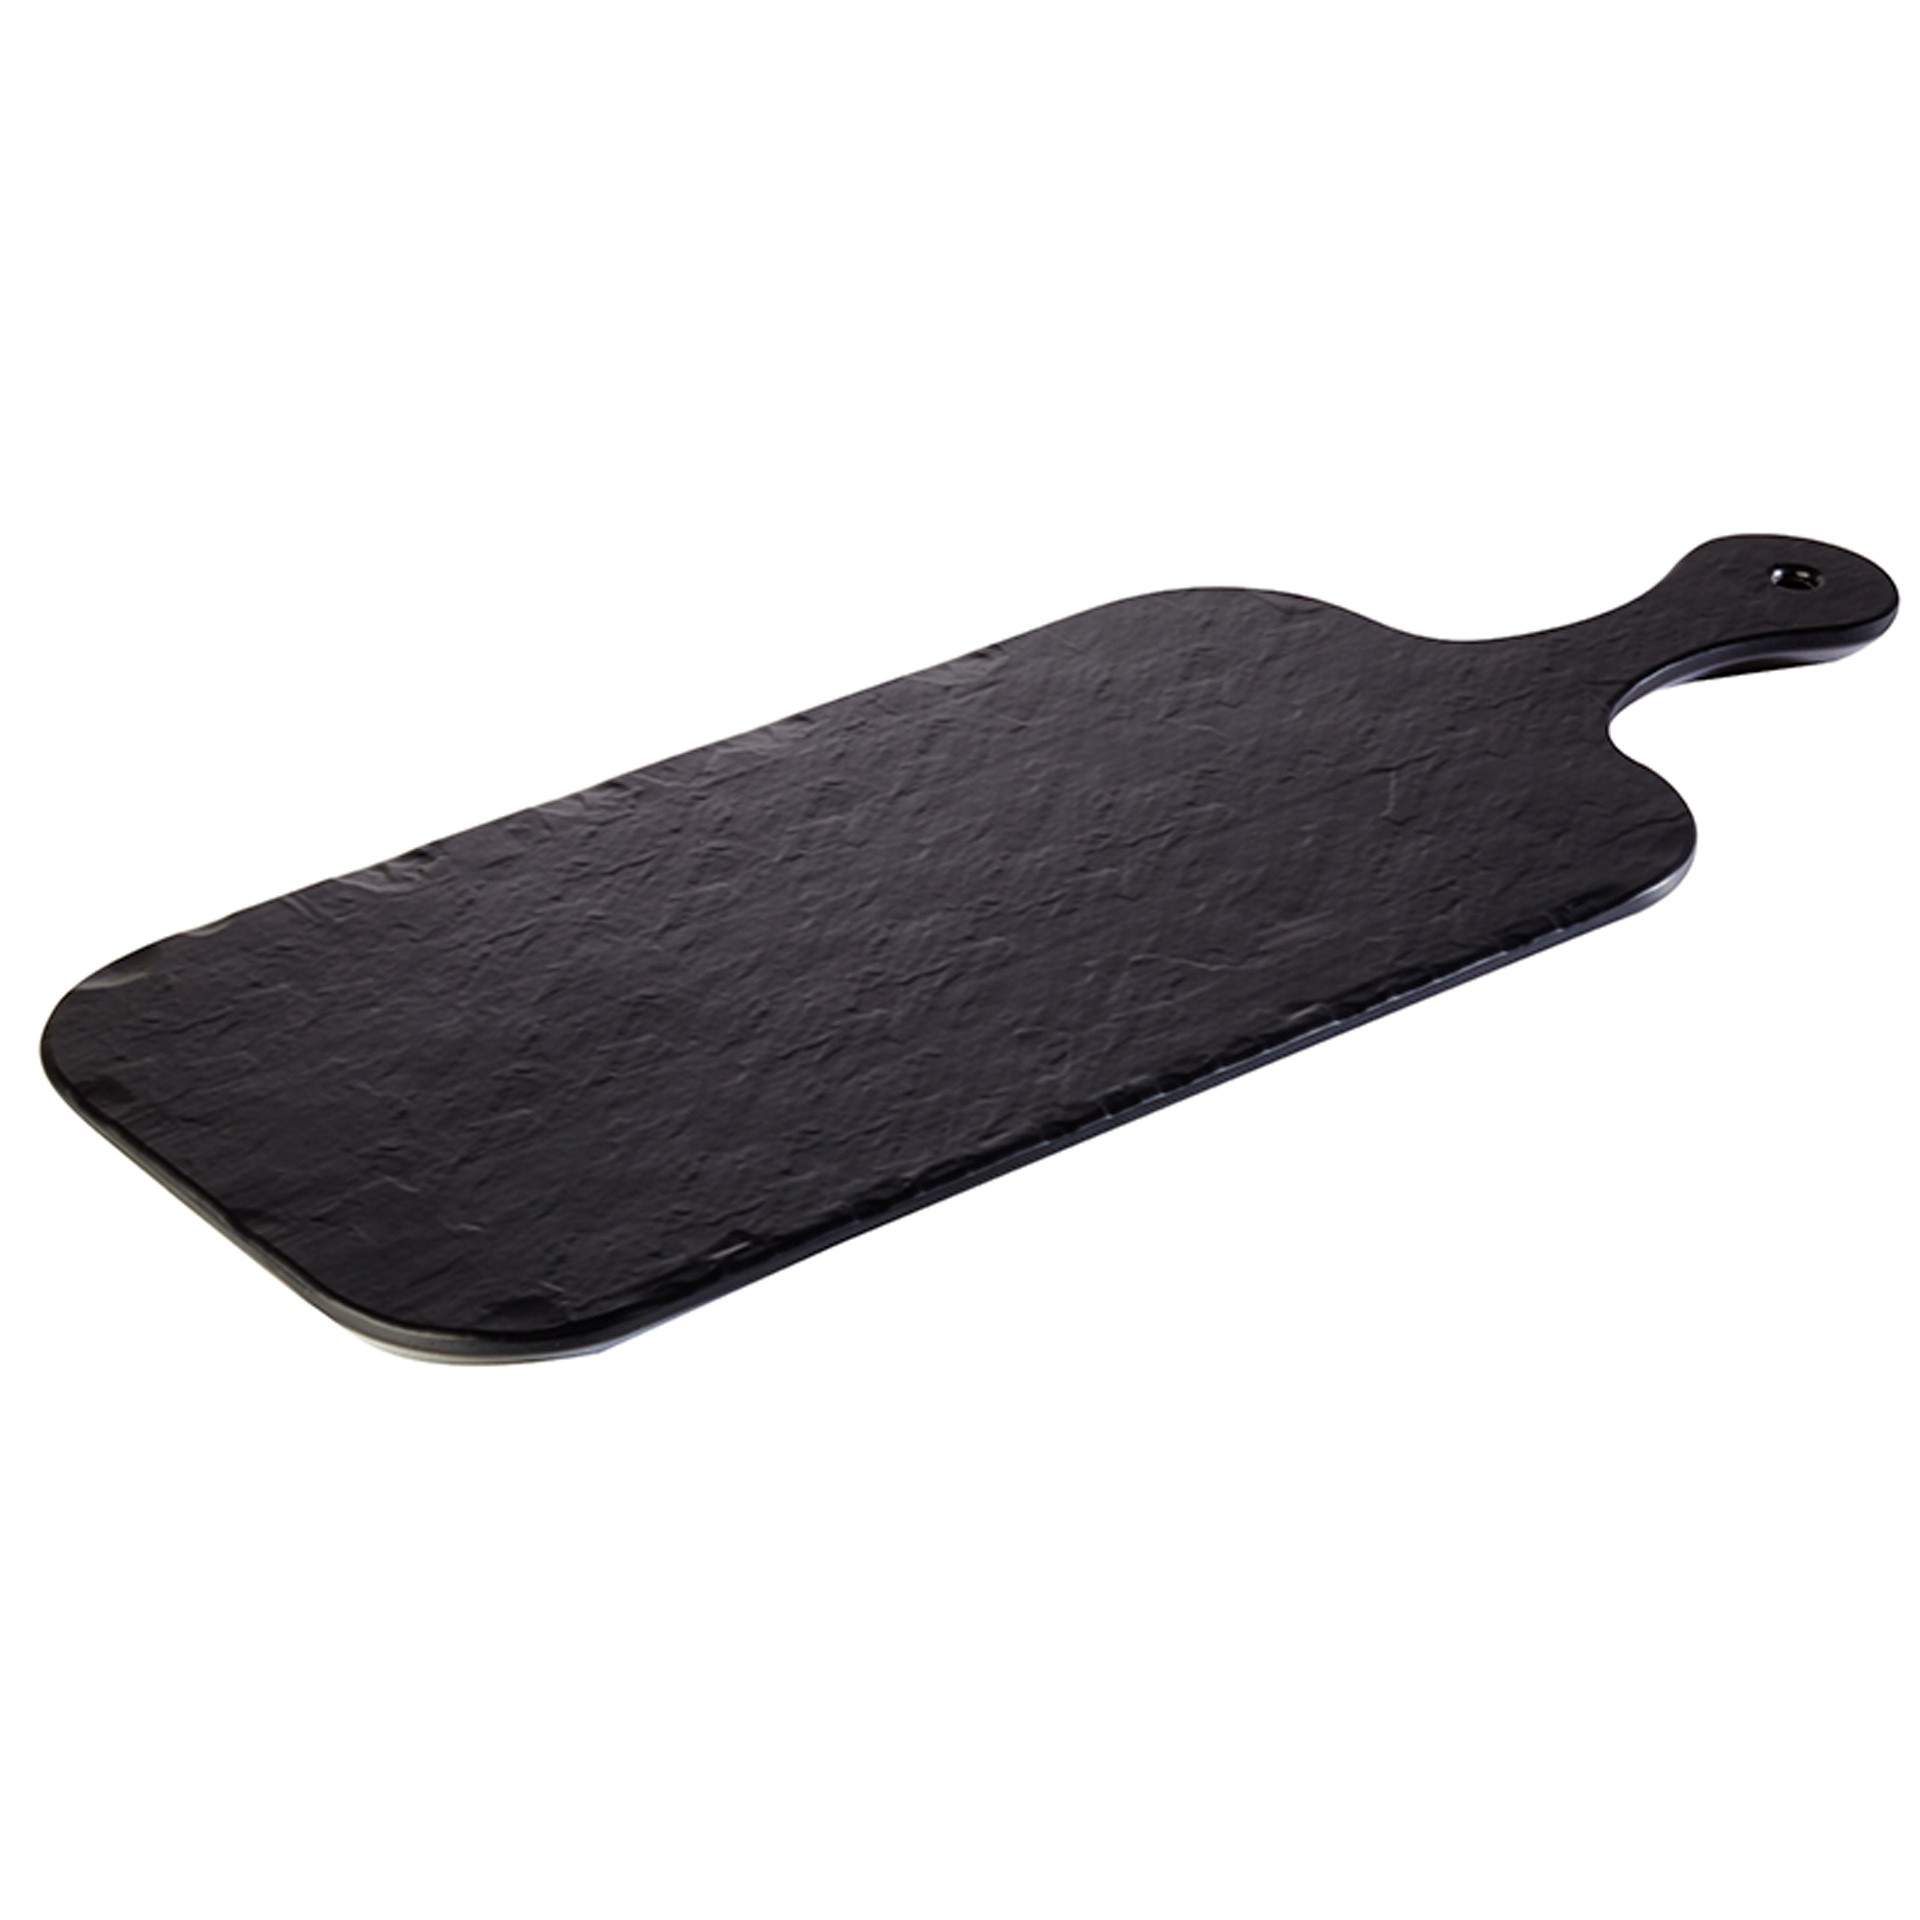 Tablett - strukturierte Oberfläche - Serie Slate Rock - schwarz - Abm. 40 x 20 x 1,5 cm - Melamin - 84258-B